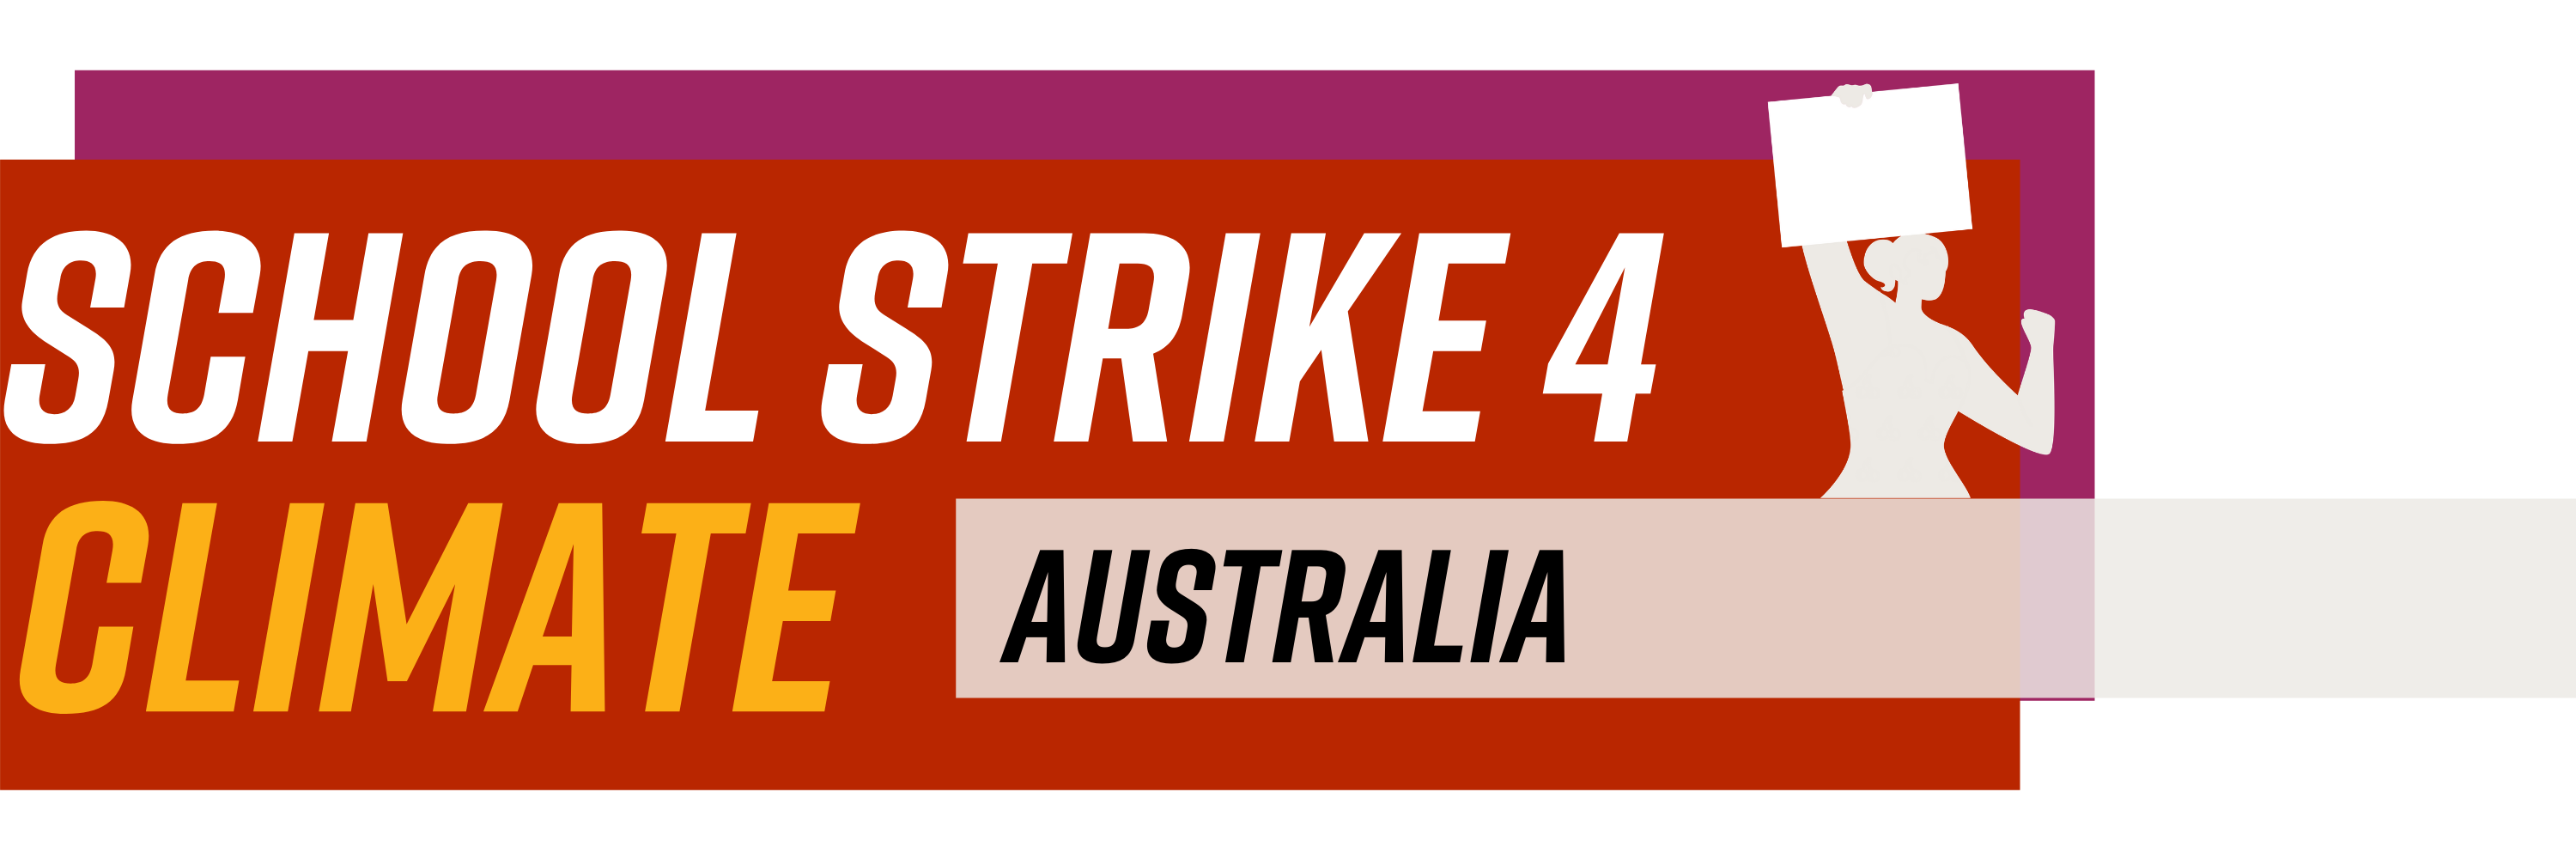 School Strike 4 Climate Australia